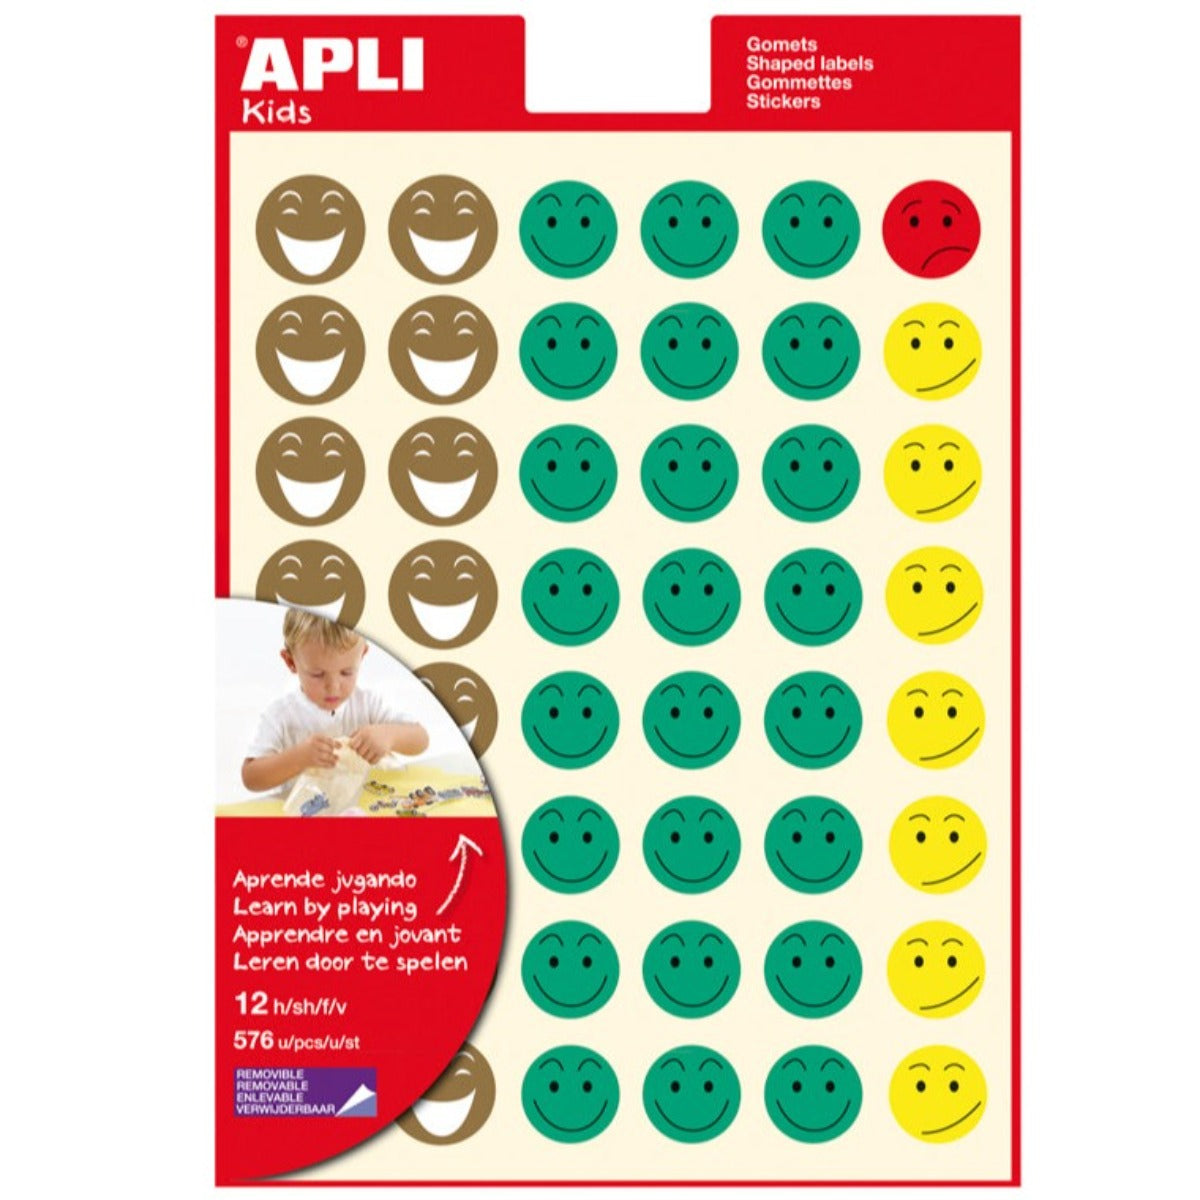 APLI - Gomets Autoadhesivo Multicolor, Modelo Smiley